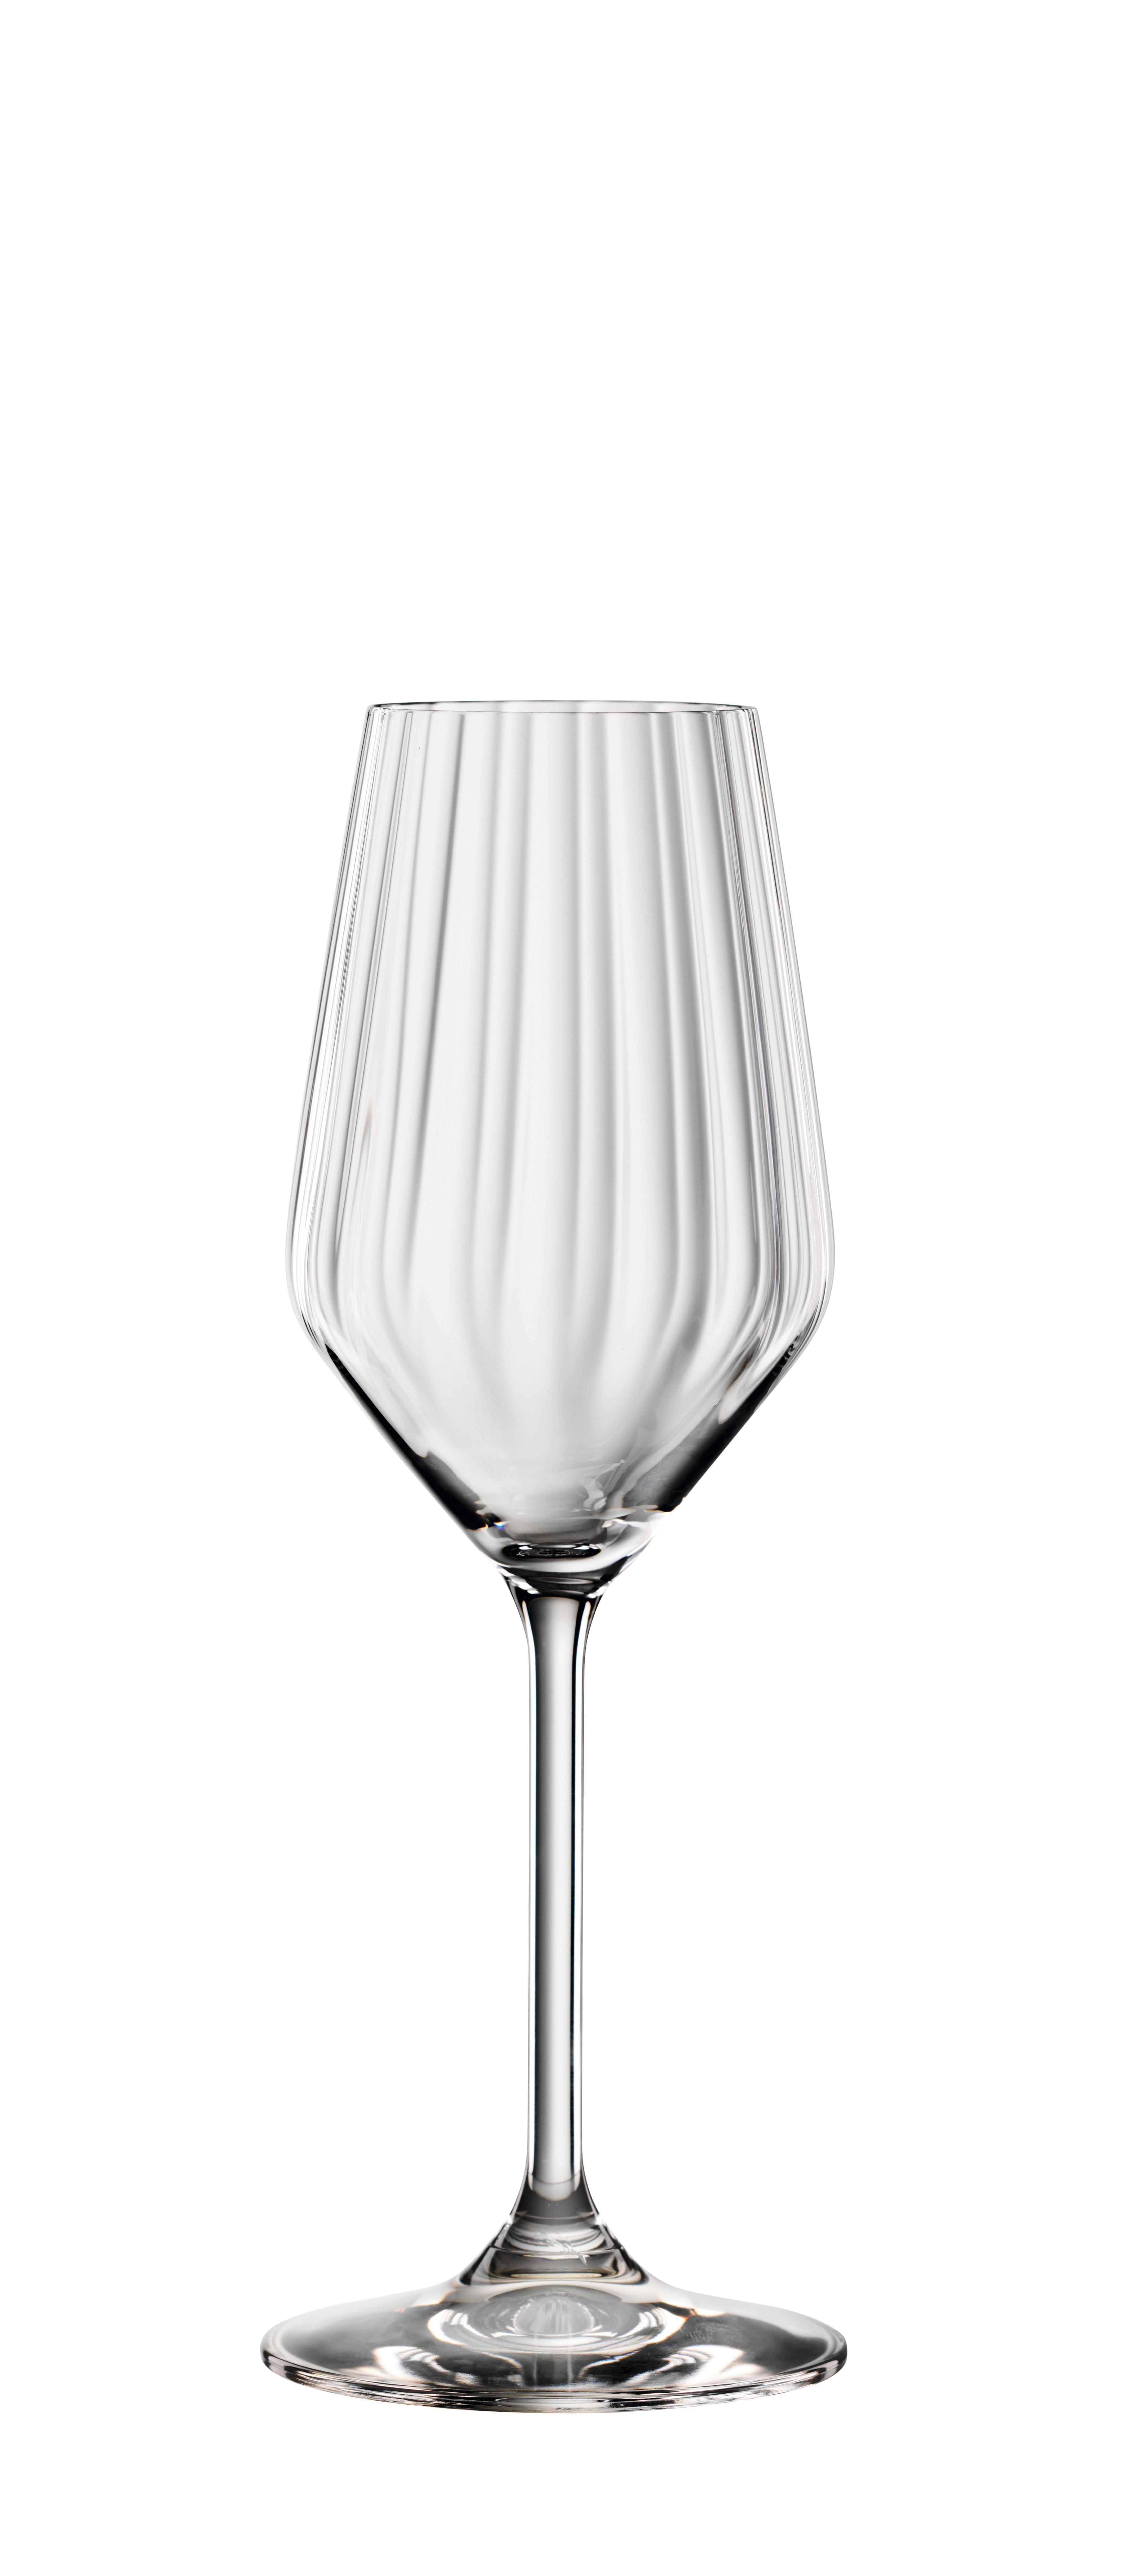 Champagnerglas Lifestyle, 4-teilig - Klar, MODERN, Glas (8,0/8,0/22,3cm) - Spiegelau